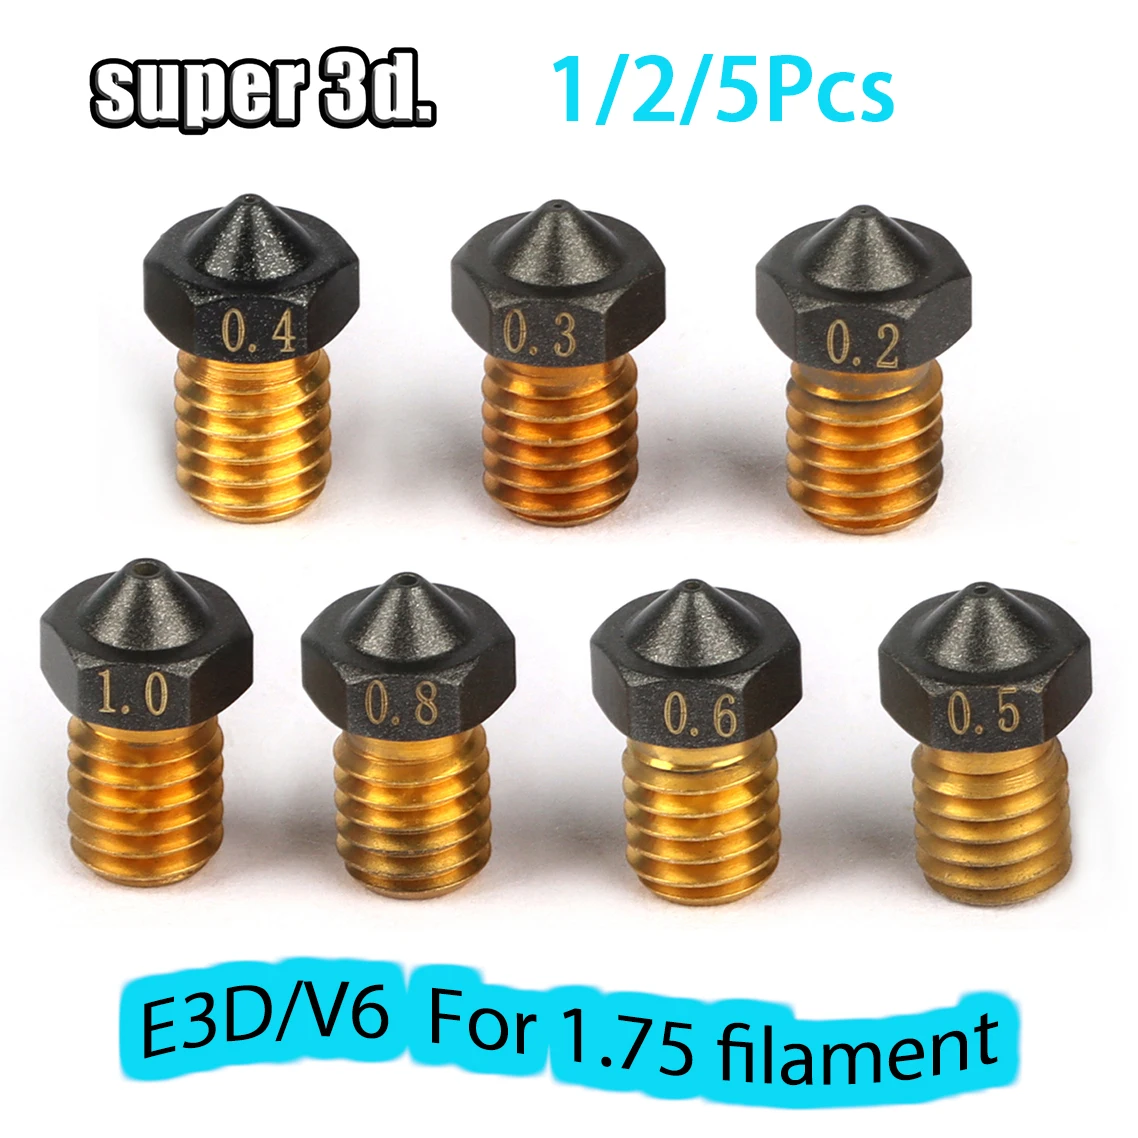 

1/2/5Pcs V6 PTFE Nozzle Brass M6 Threaded 0.2/0.3/0.4/0.5/0.6/0.8/1.0mm for 3D Printer 1.75mm E3D V6 Nozzle Hotend Extruder